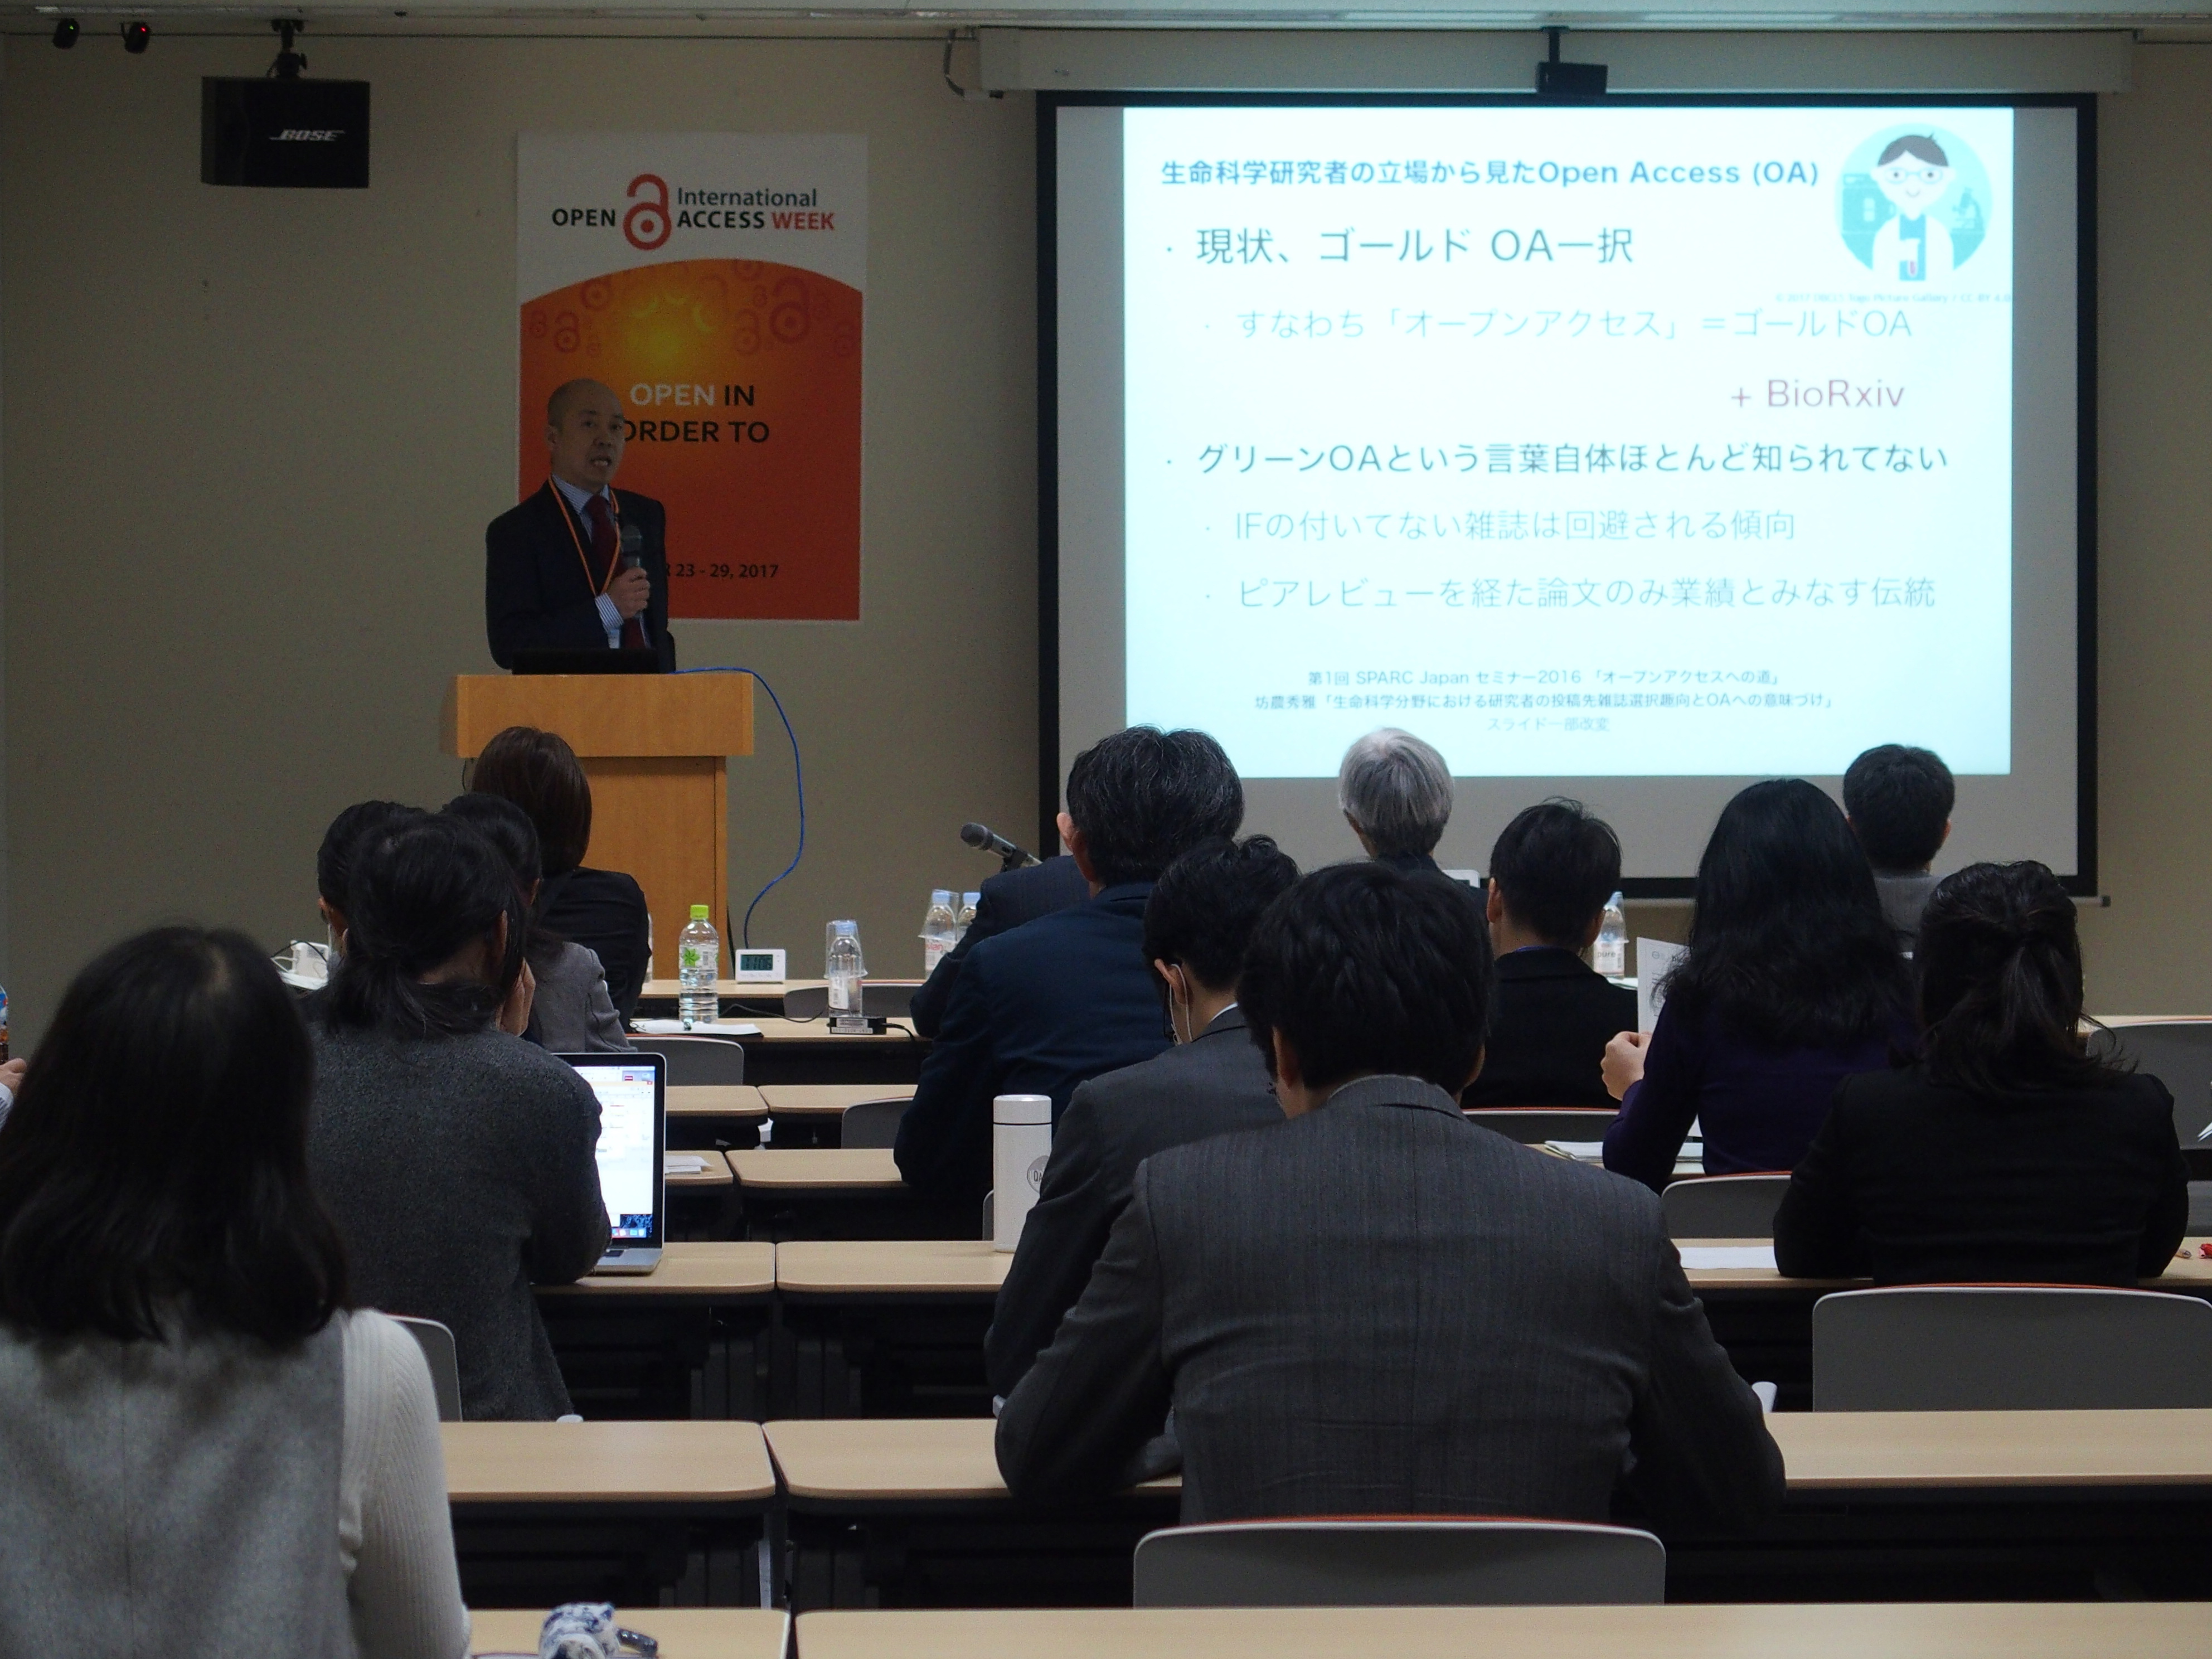 The 2nd SPARC Japan Seminar 2017